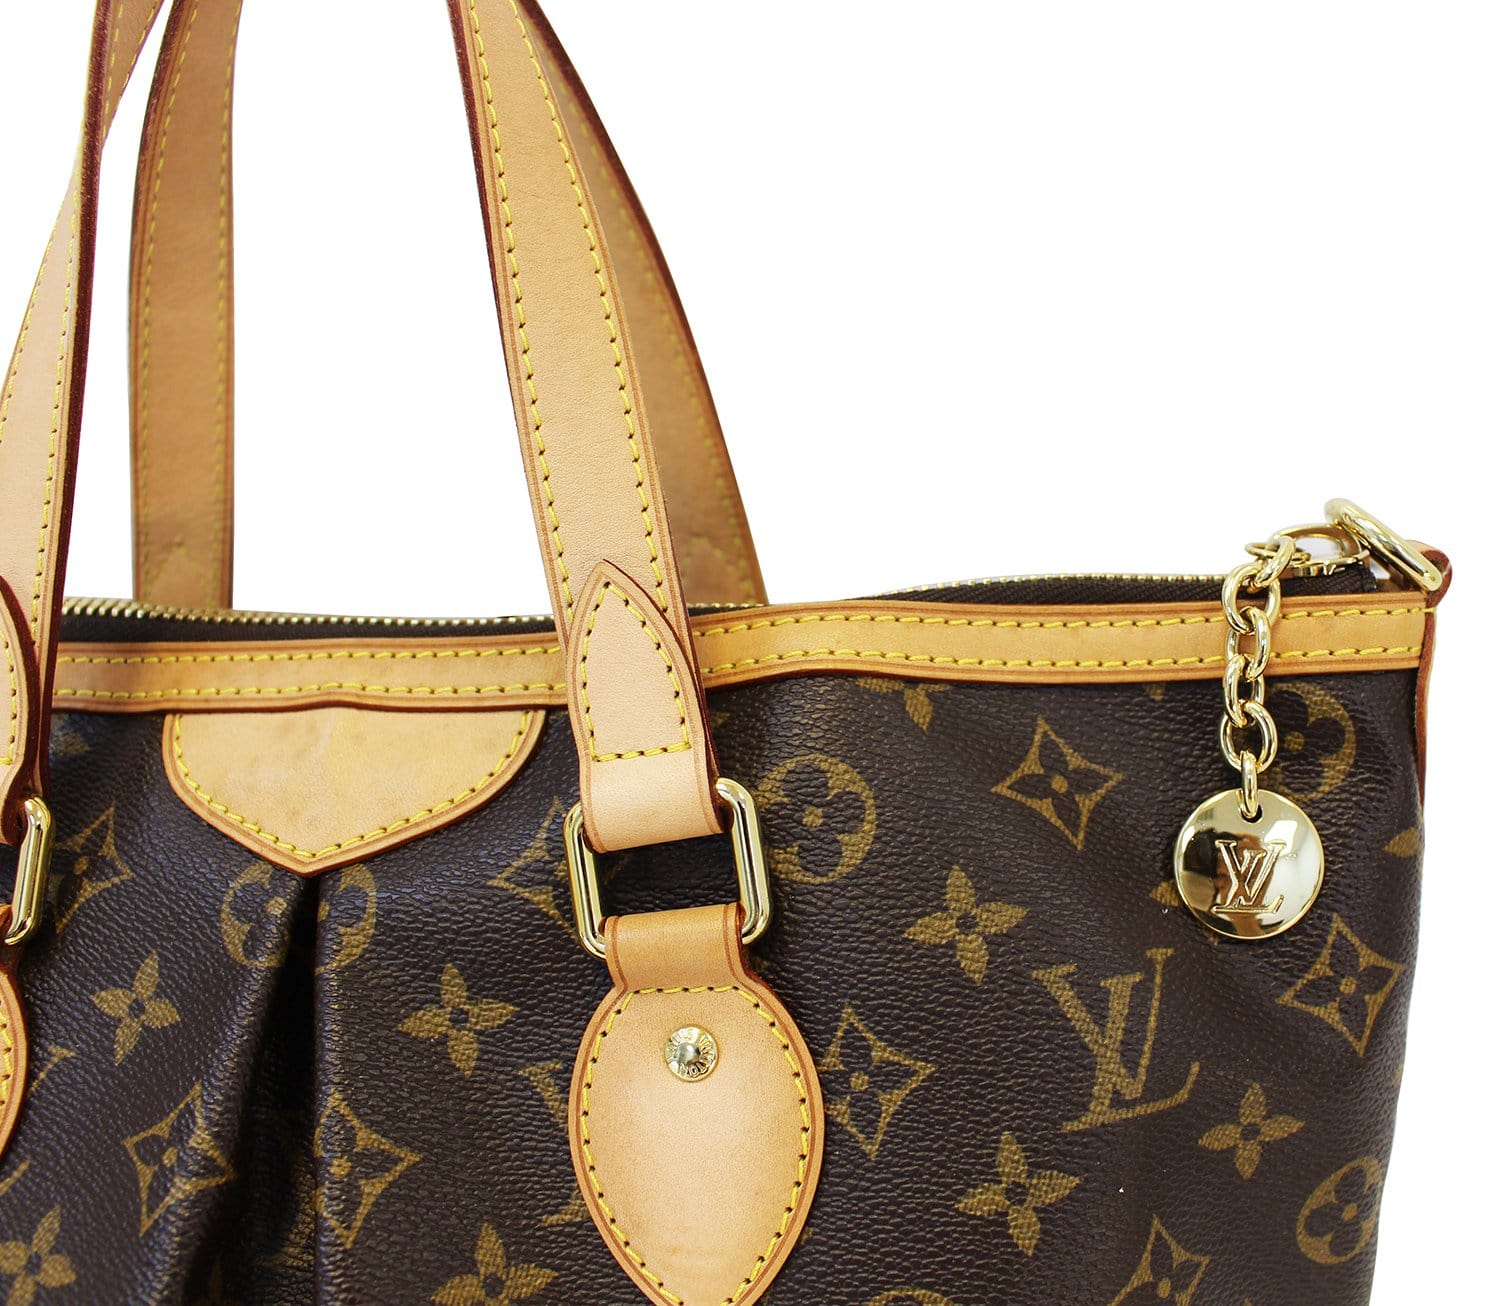  Harga  Handbag Pria Louis Vuitton  Original  